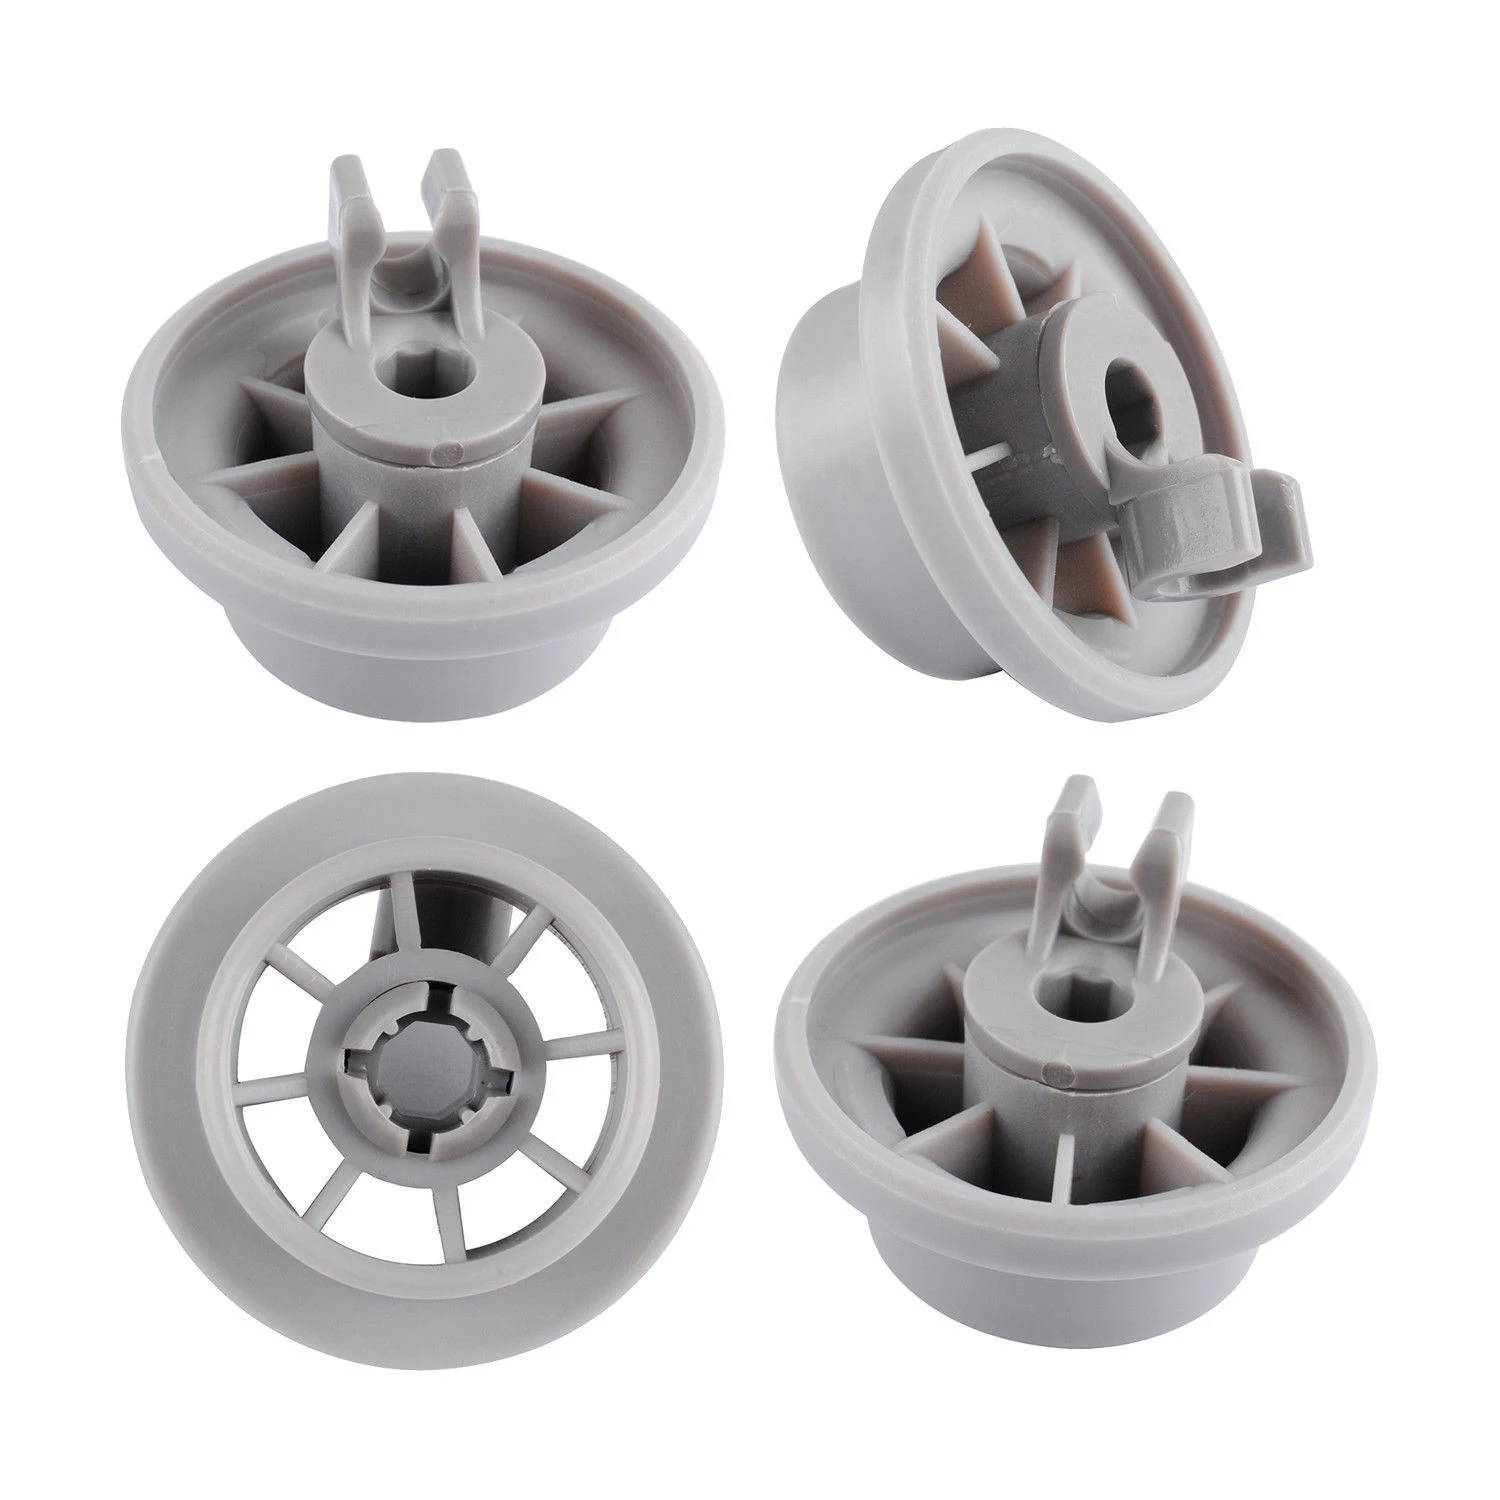 4Pcs Dishwasher Rack Basket Wheel Fit For Bosch Siemens Neff Dish Washer Grey Wheels Replacement Dish Rack Wheels Parts Access